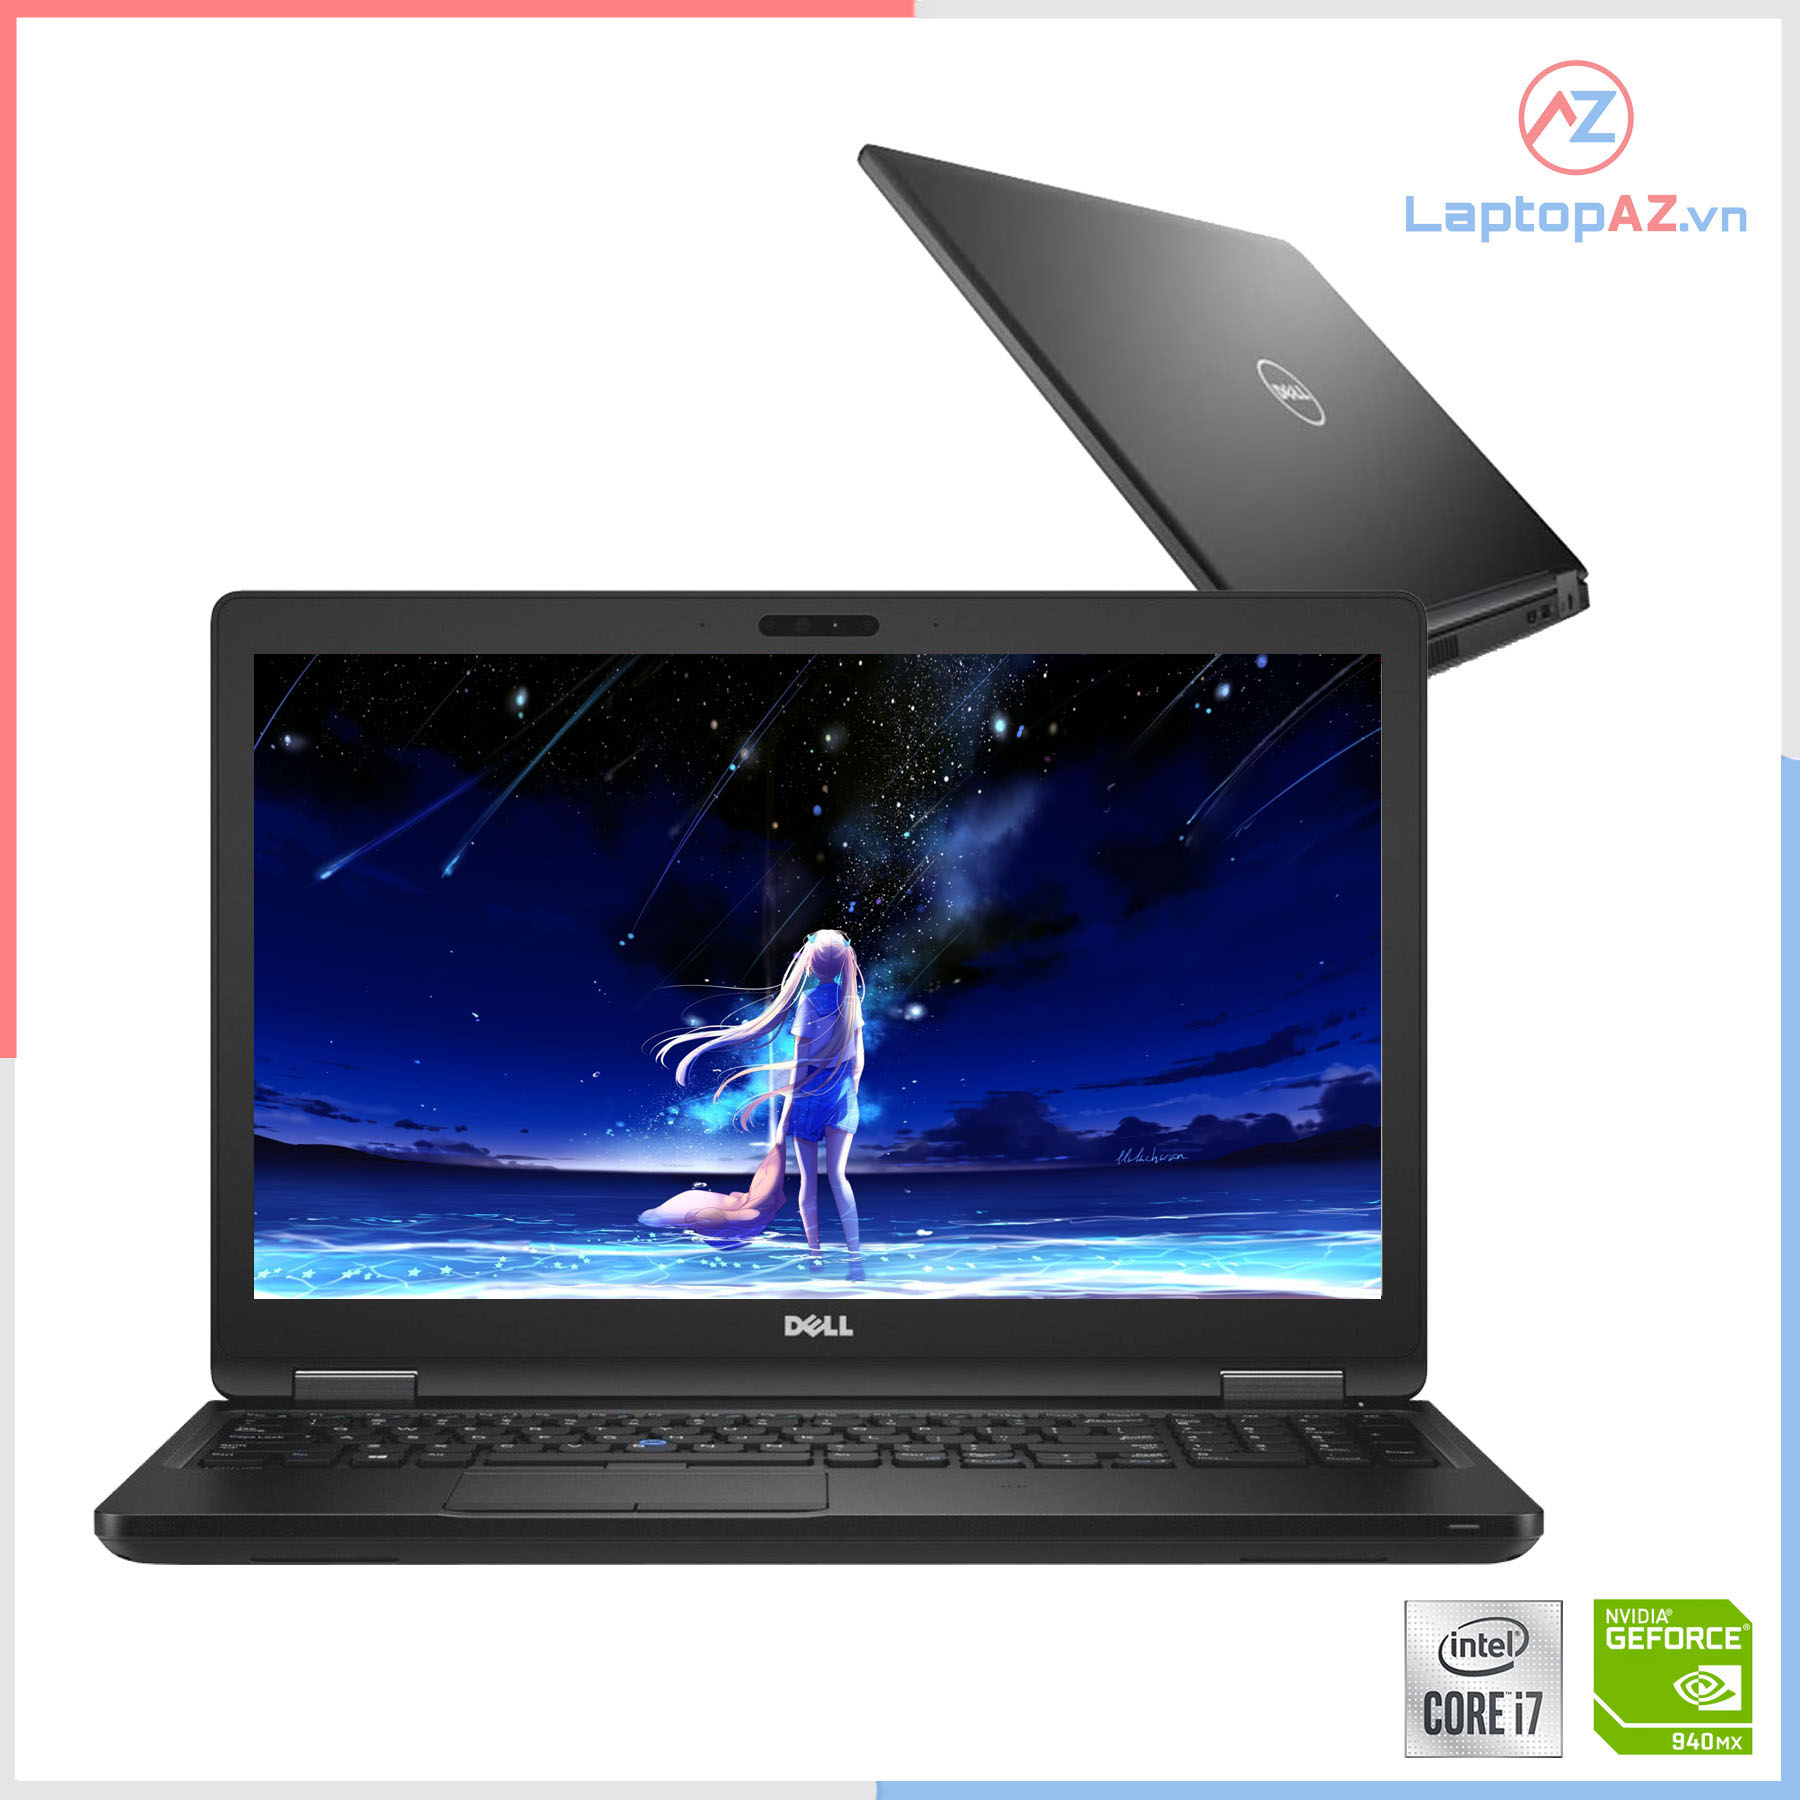 Bán Laptop Dell Latitude E5580 core i7 chính hãng 